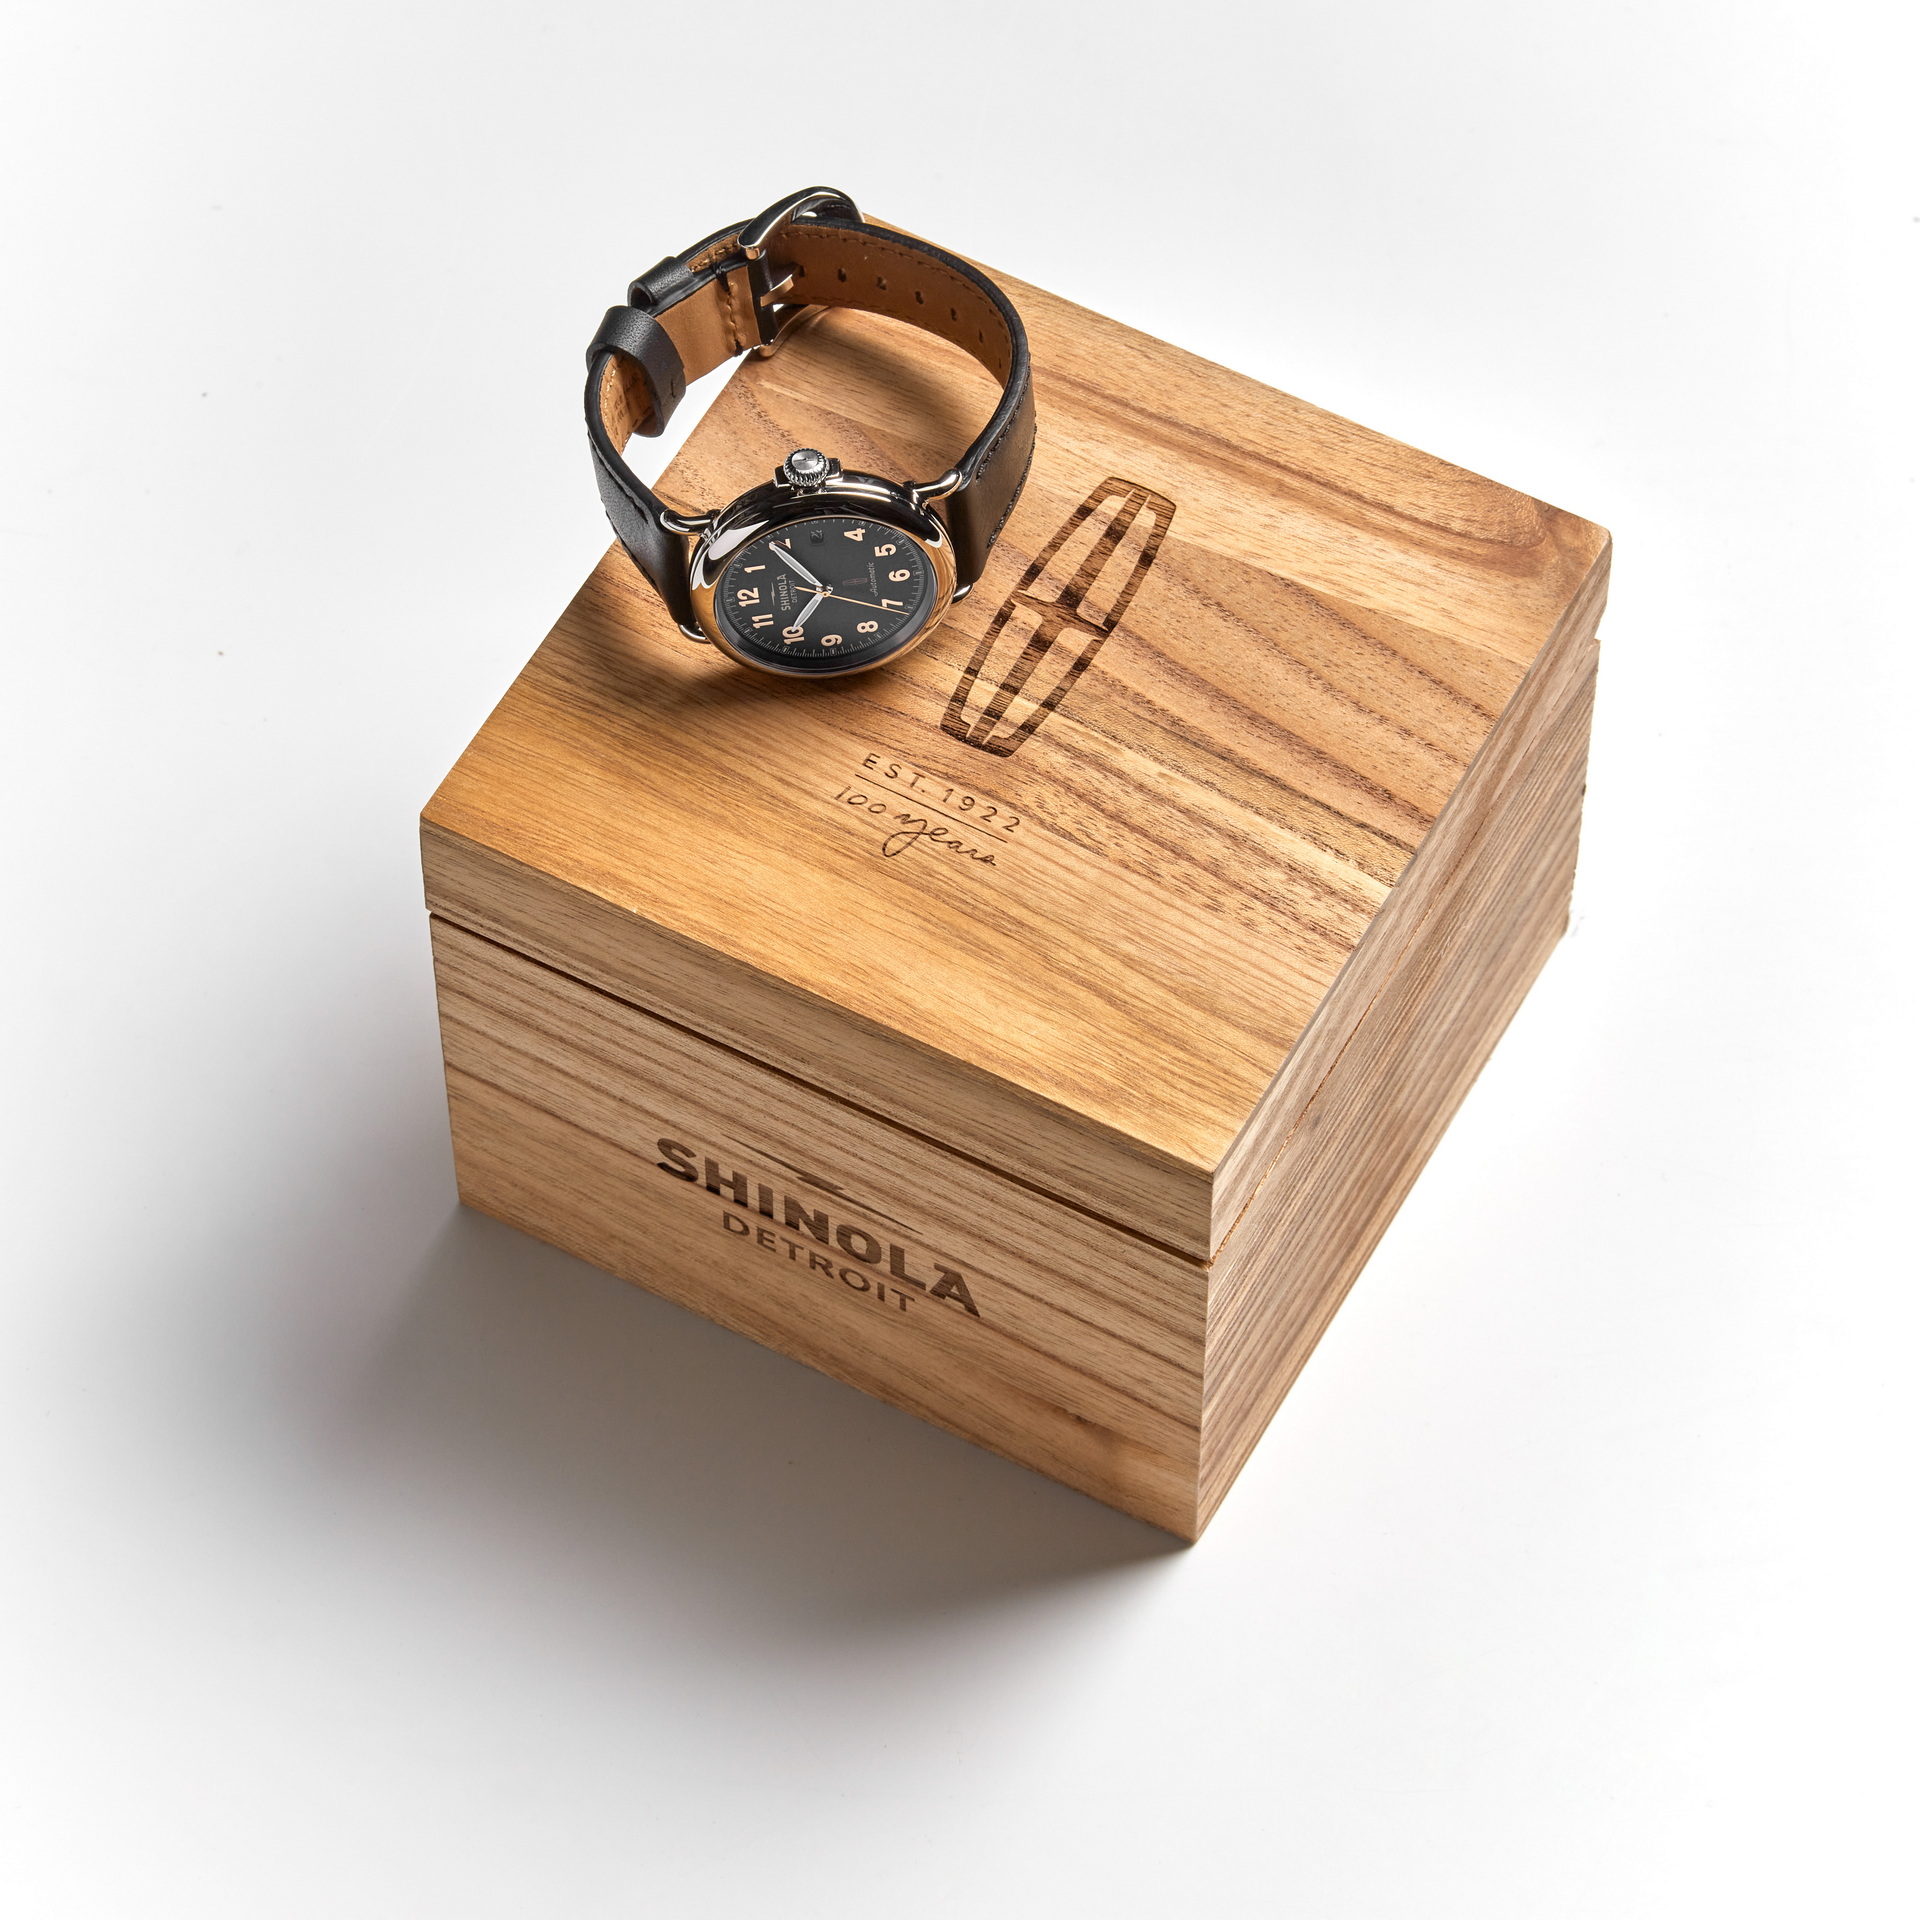 2022-Lincoln-Shinola-Timepieces-6.jpeg